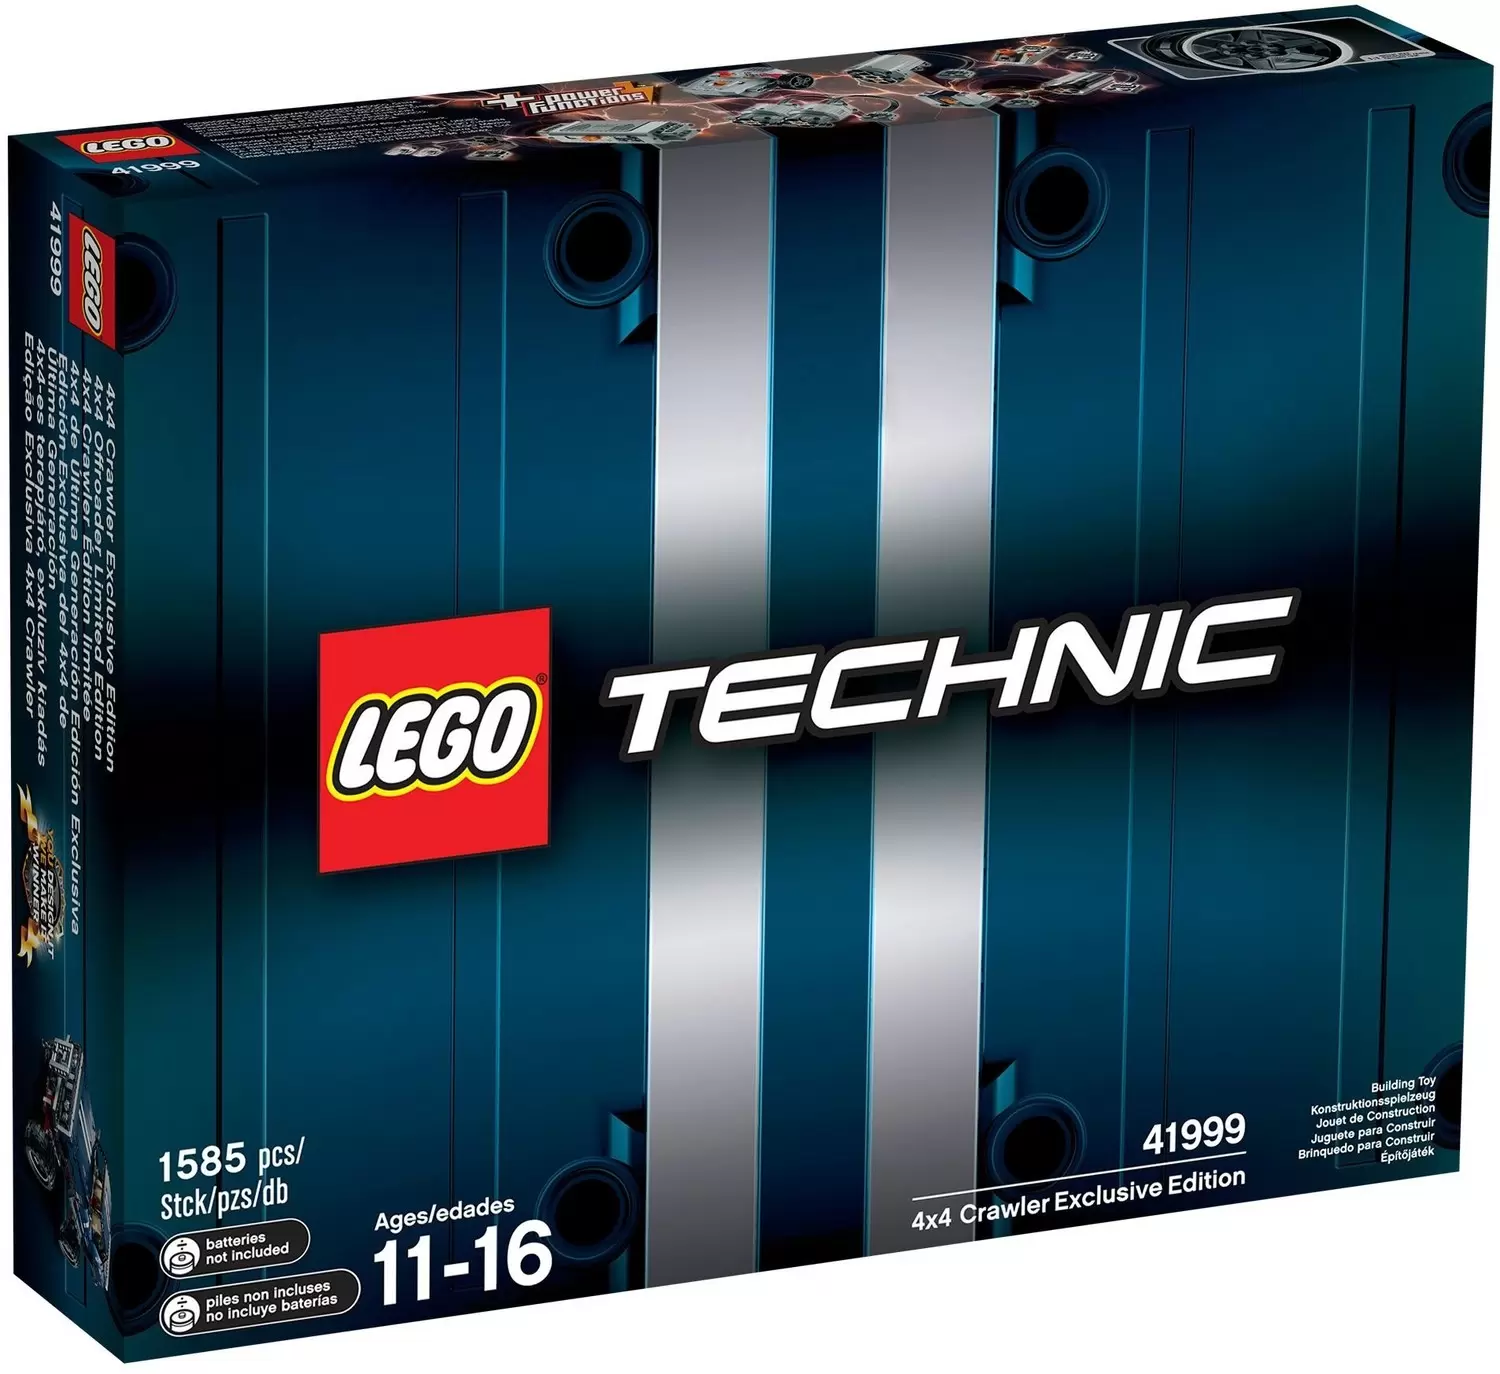 LEGO Technic - 4x4 Crawler Exclusive Edition